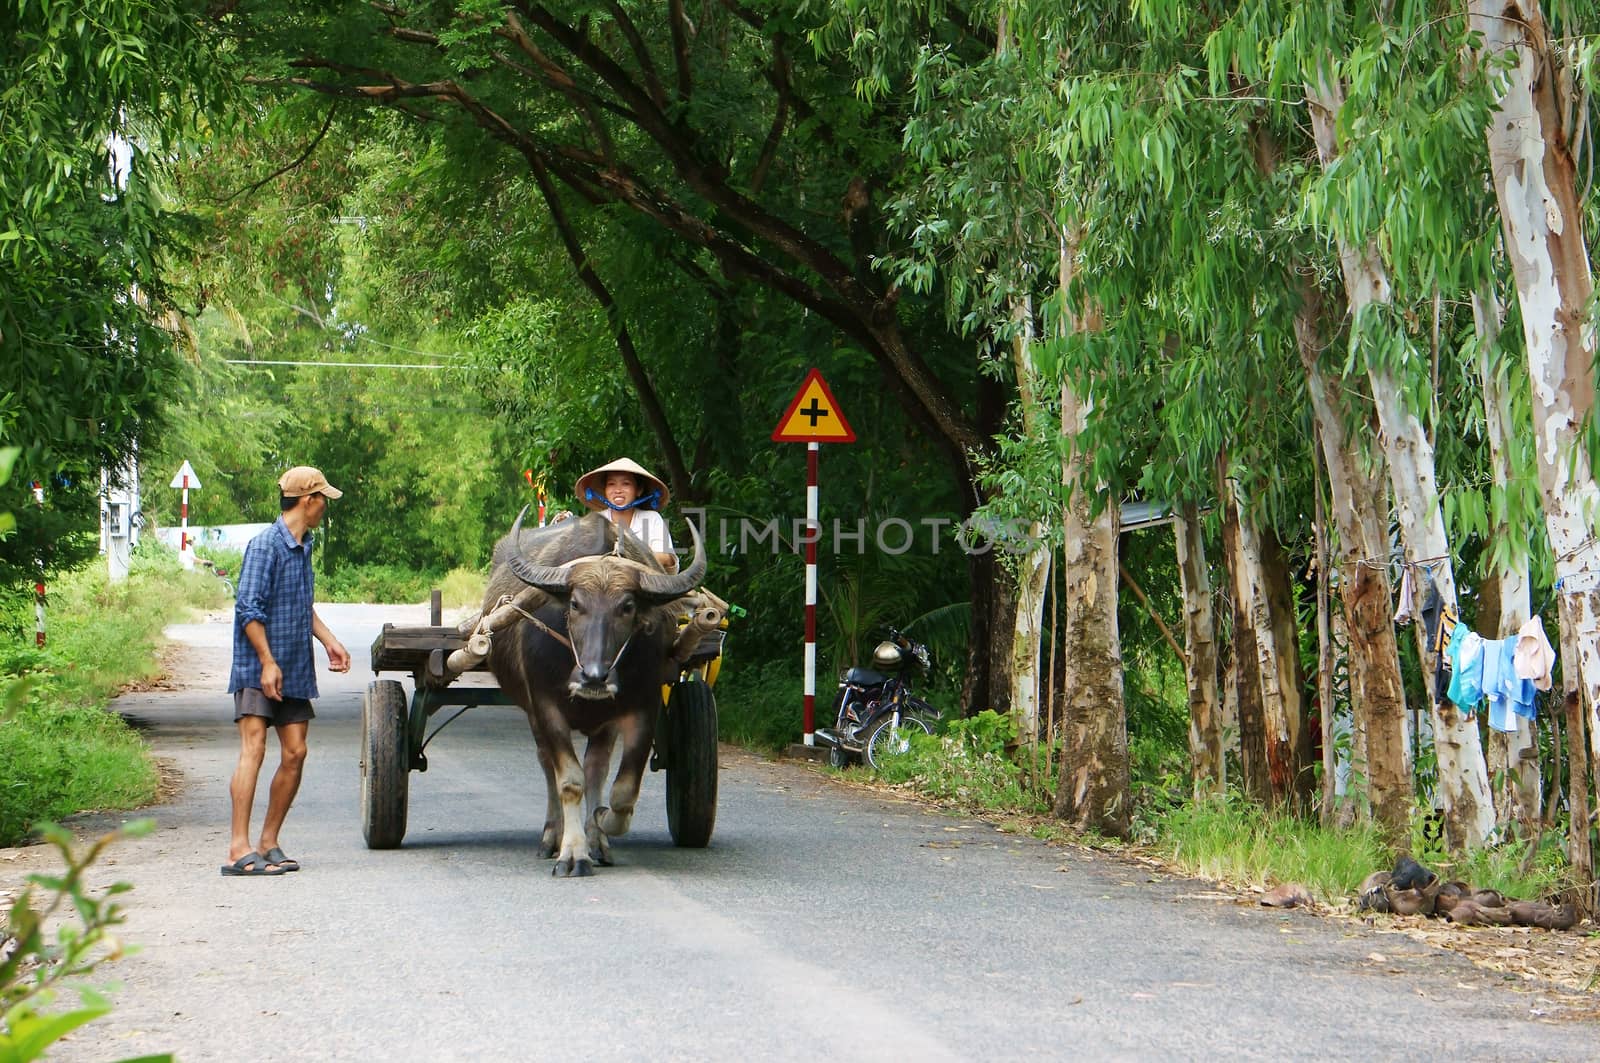 farmer riding buffalo cart on country road by xuanhuongho